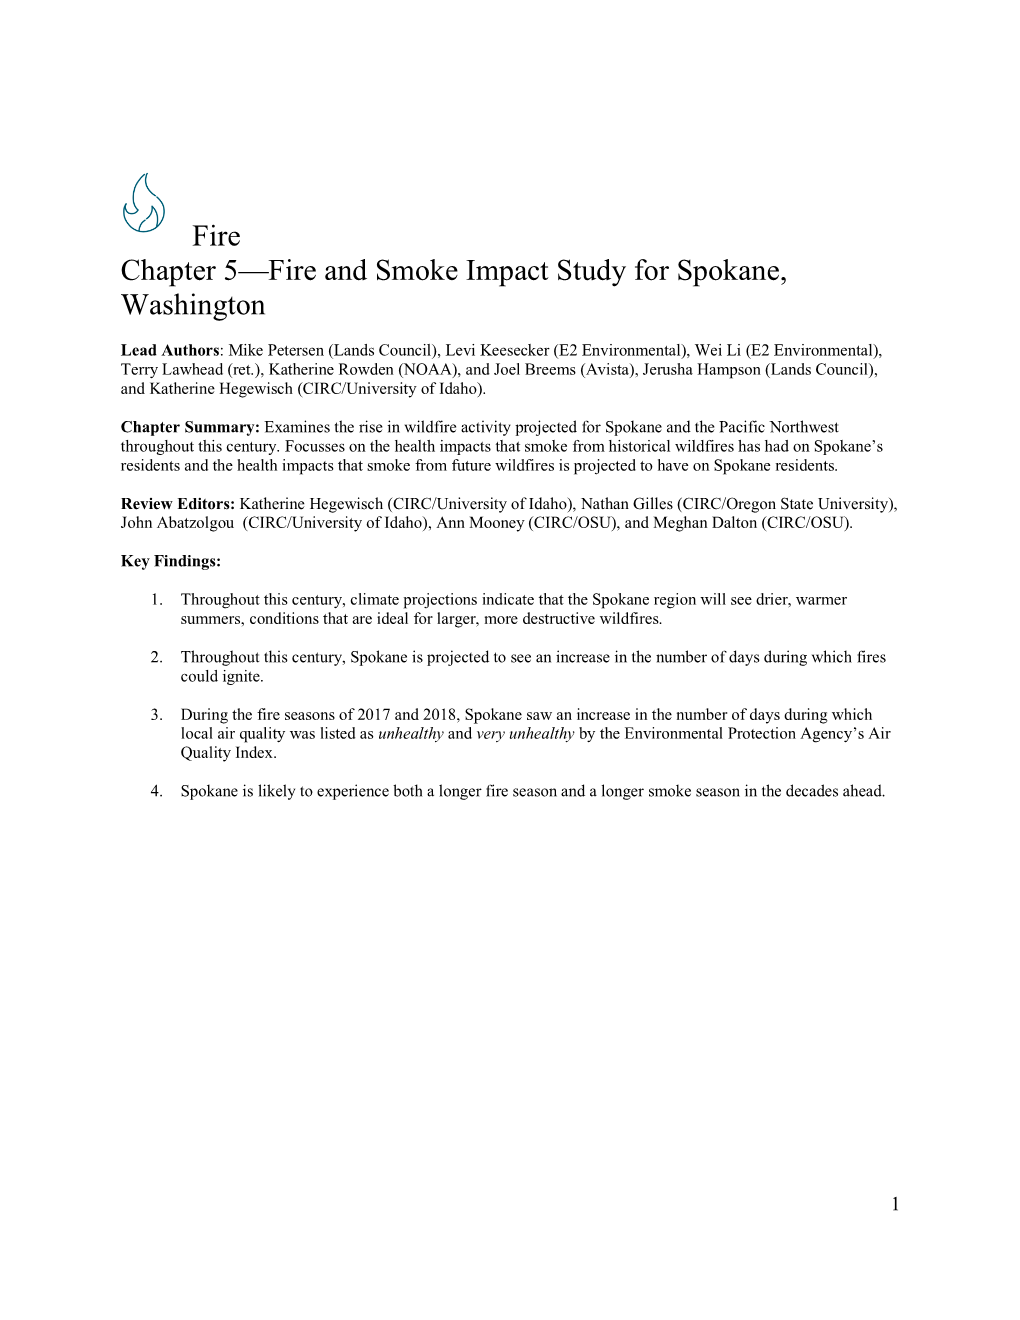 Fire Chapter 5—Fire and Smoke Impact Study for Spokane, Washington